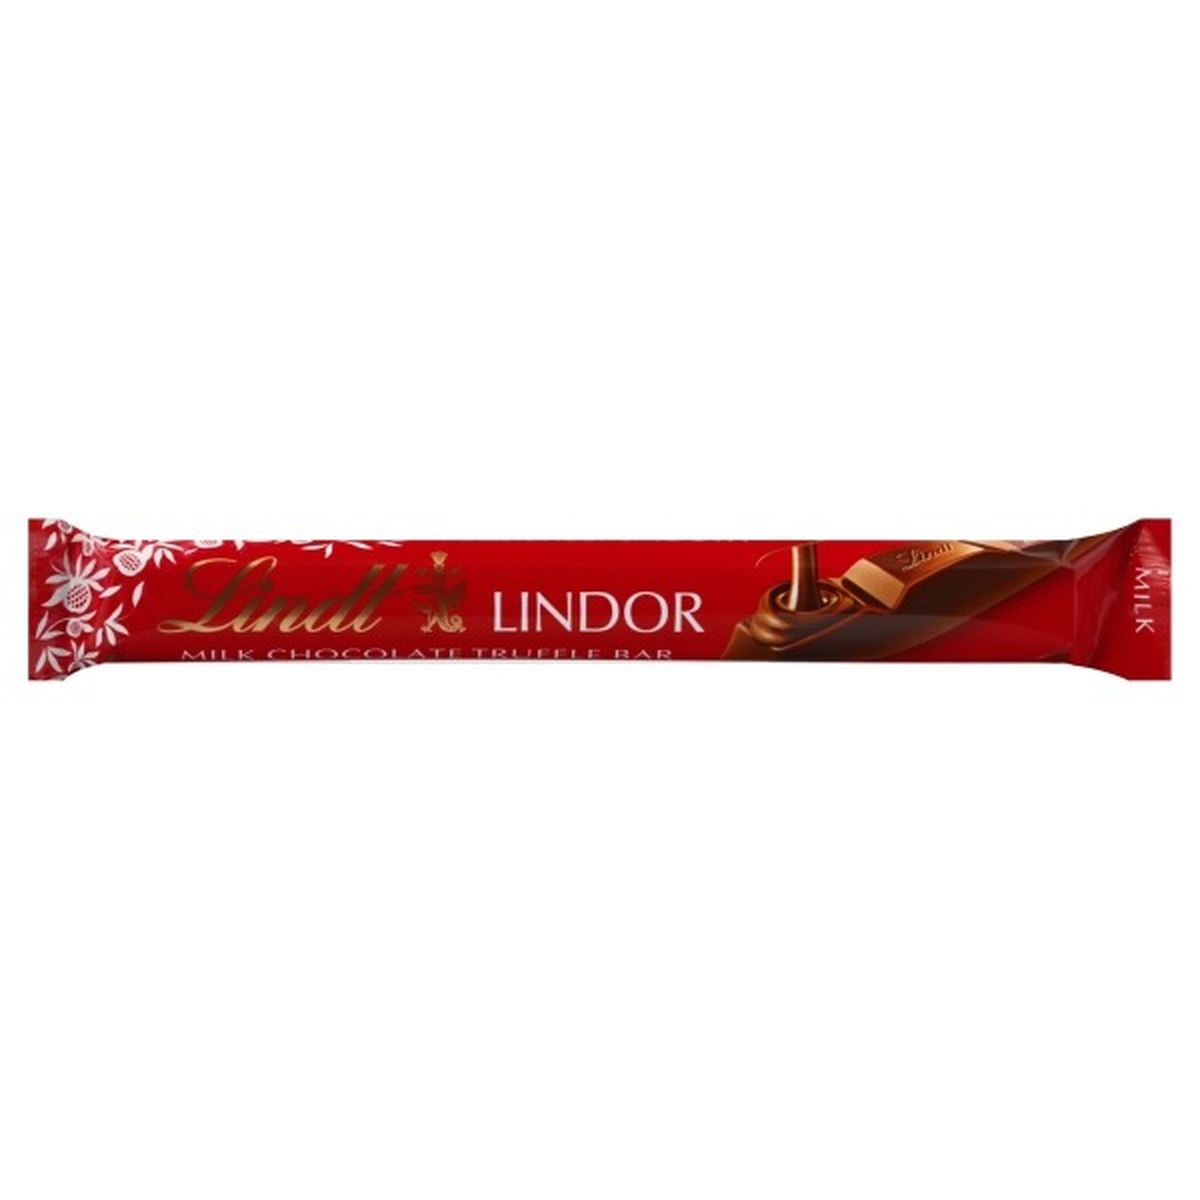 Calories in Lindt LINDOR Truffle Bar, Milk Chocolate